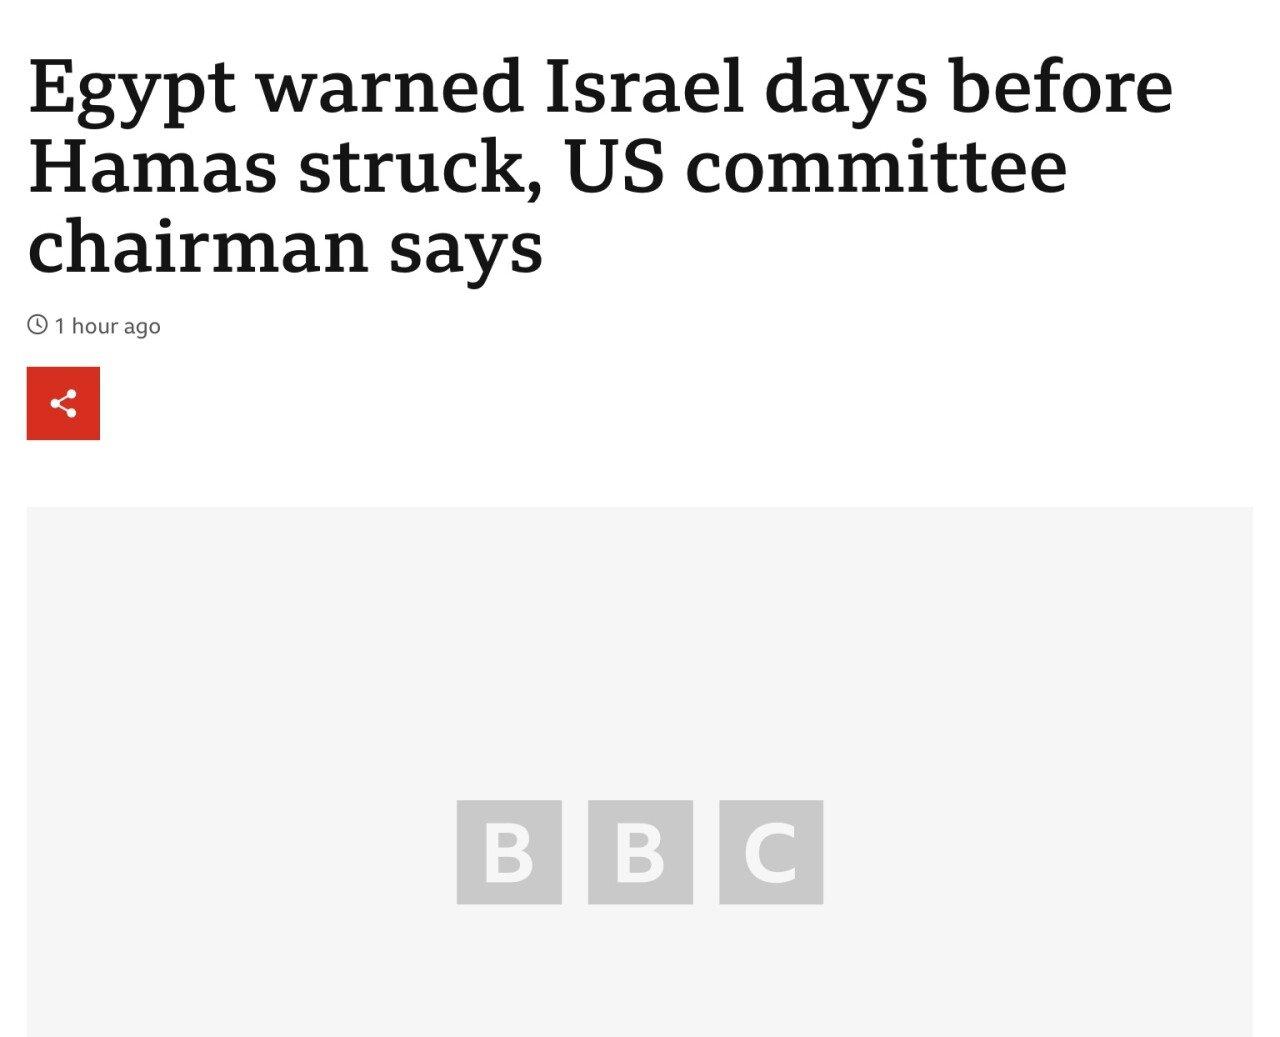 BBC) 이집트가 하마스 공격에 대해 경고했으나 무시당함